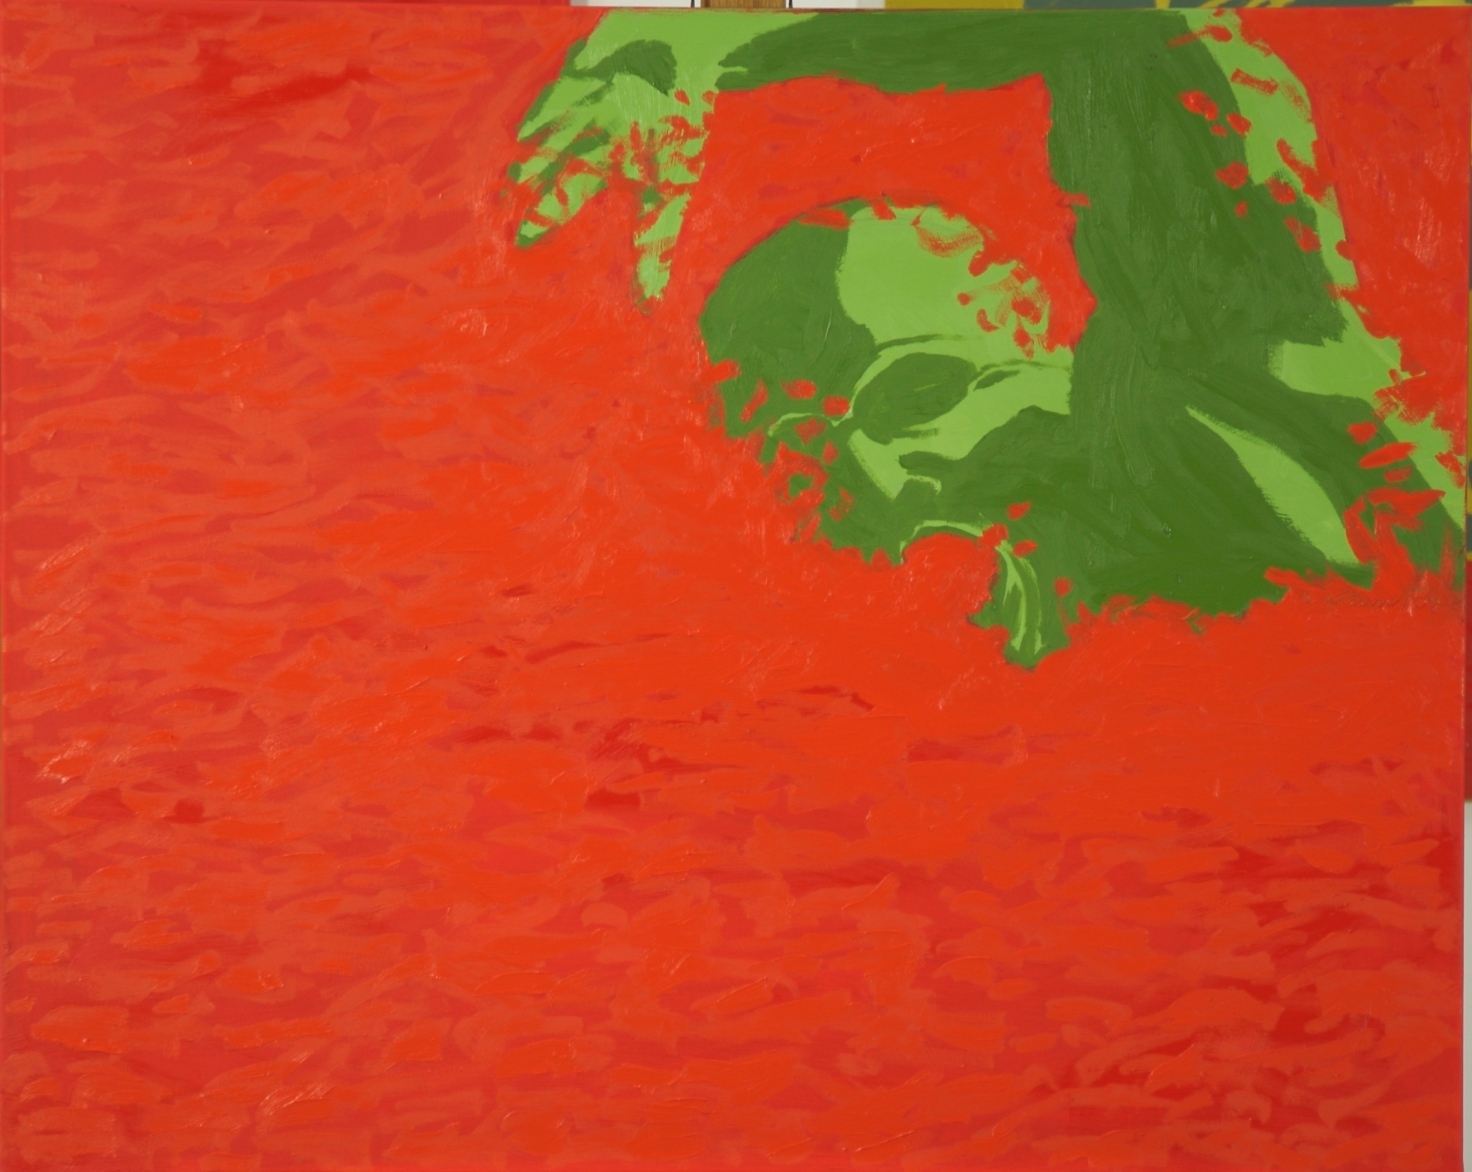 Ondřej Kohout, Drinking Swimmer, oil on canvas, 2008